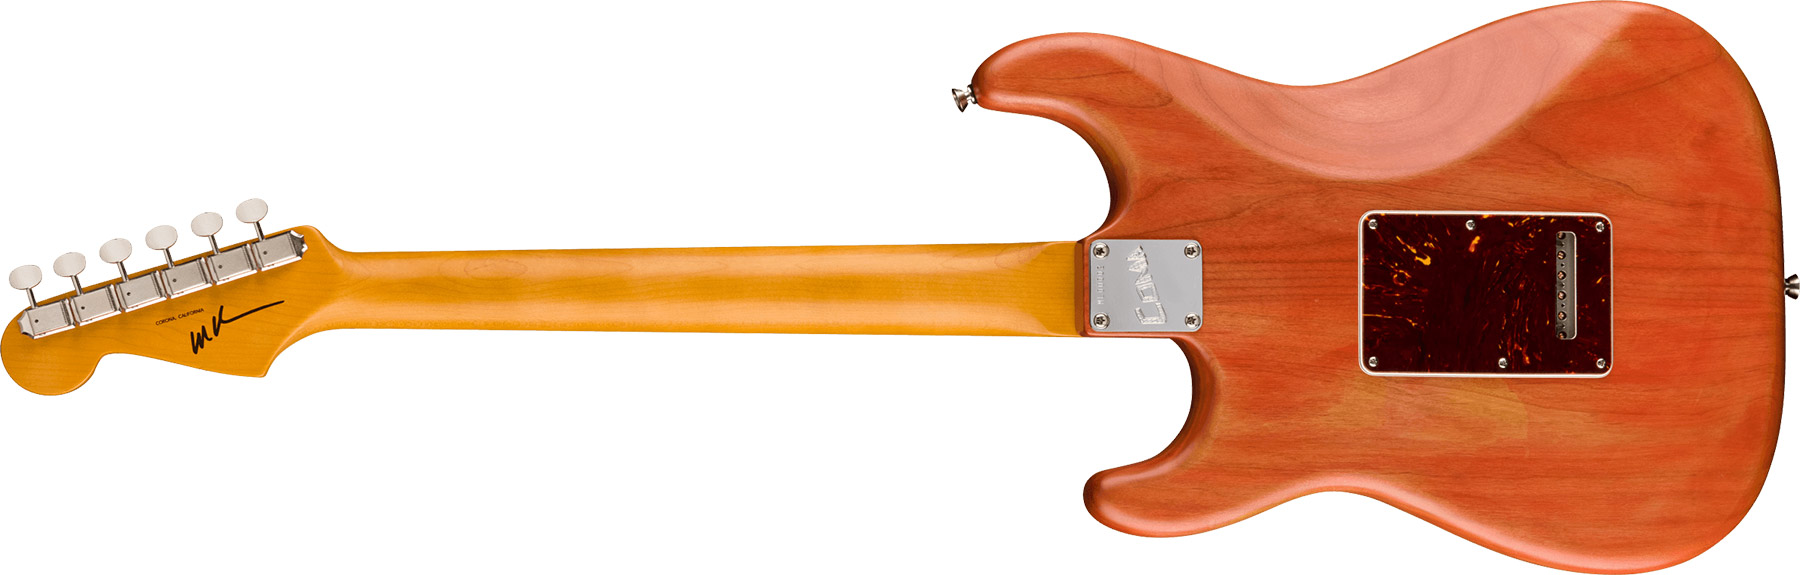 Fender Michael Landau Strat Coma Stories Usa Signature Hss Trem Rw - Coma Red - Guitarra eléctrica con forma de str. - Variation 1